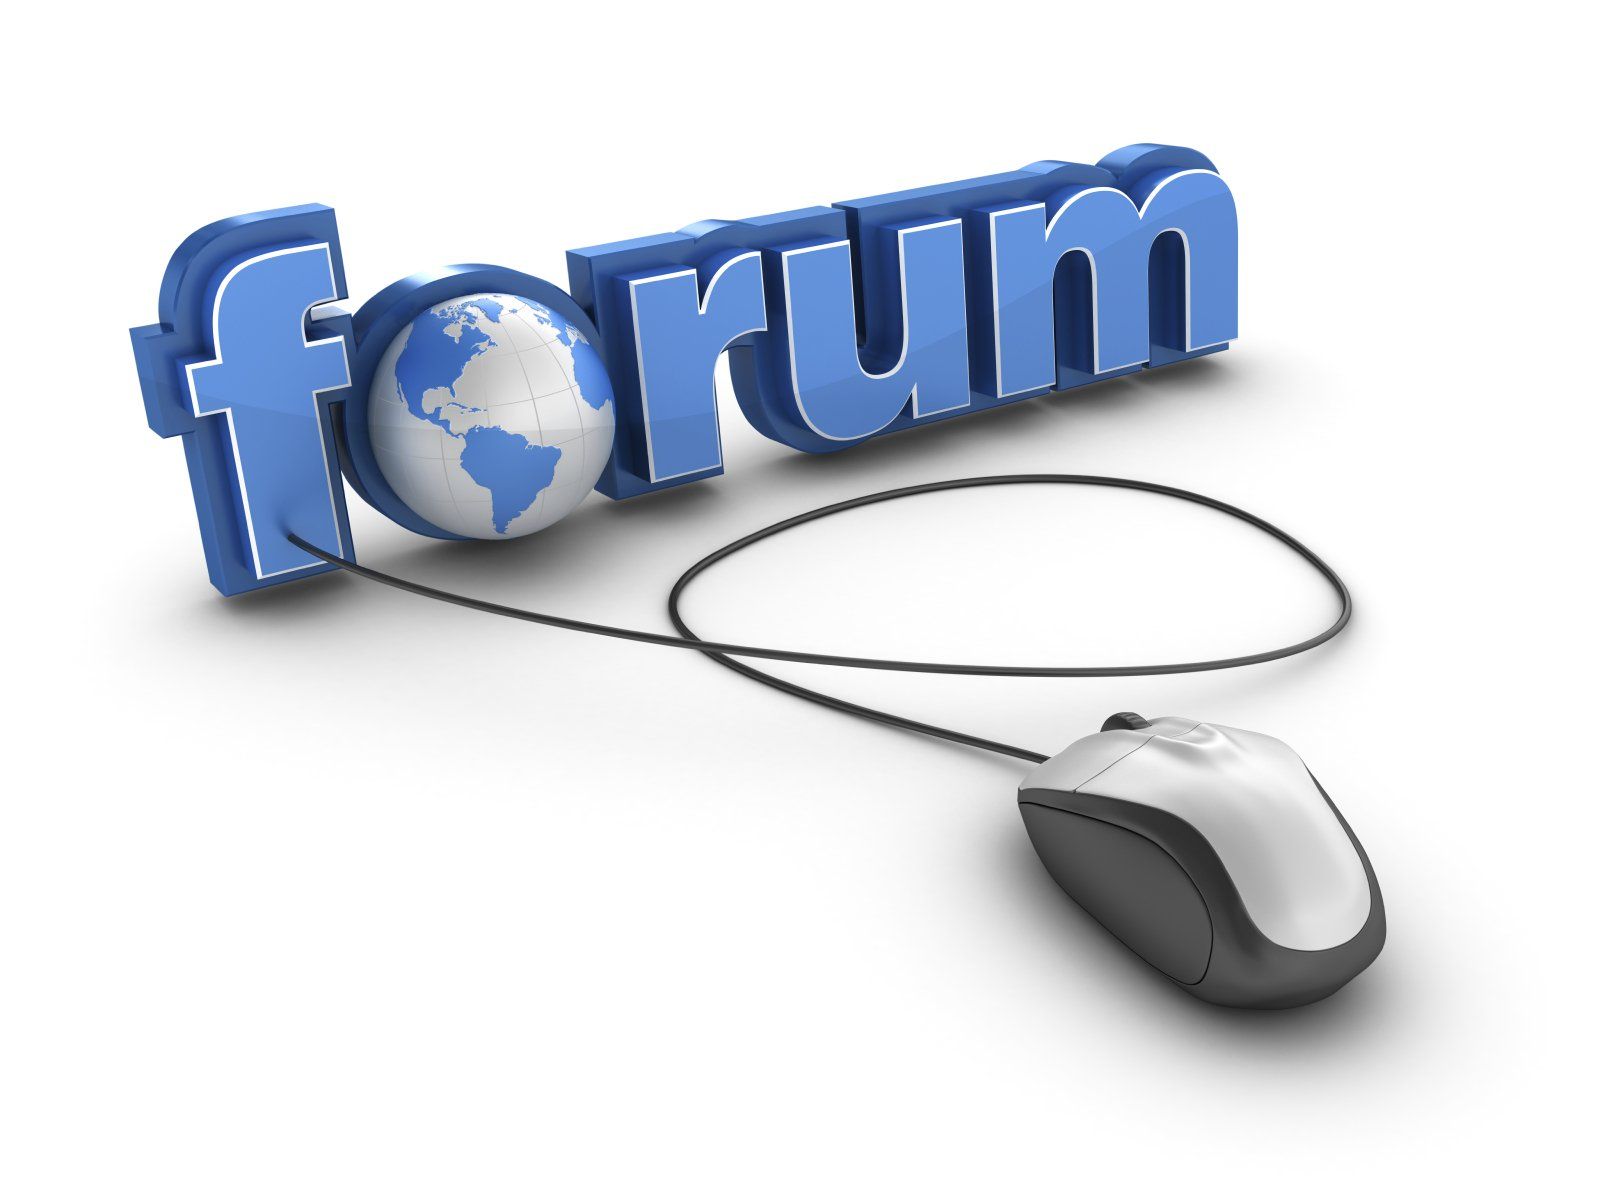 Internet forums